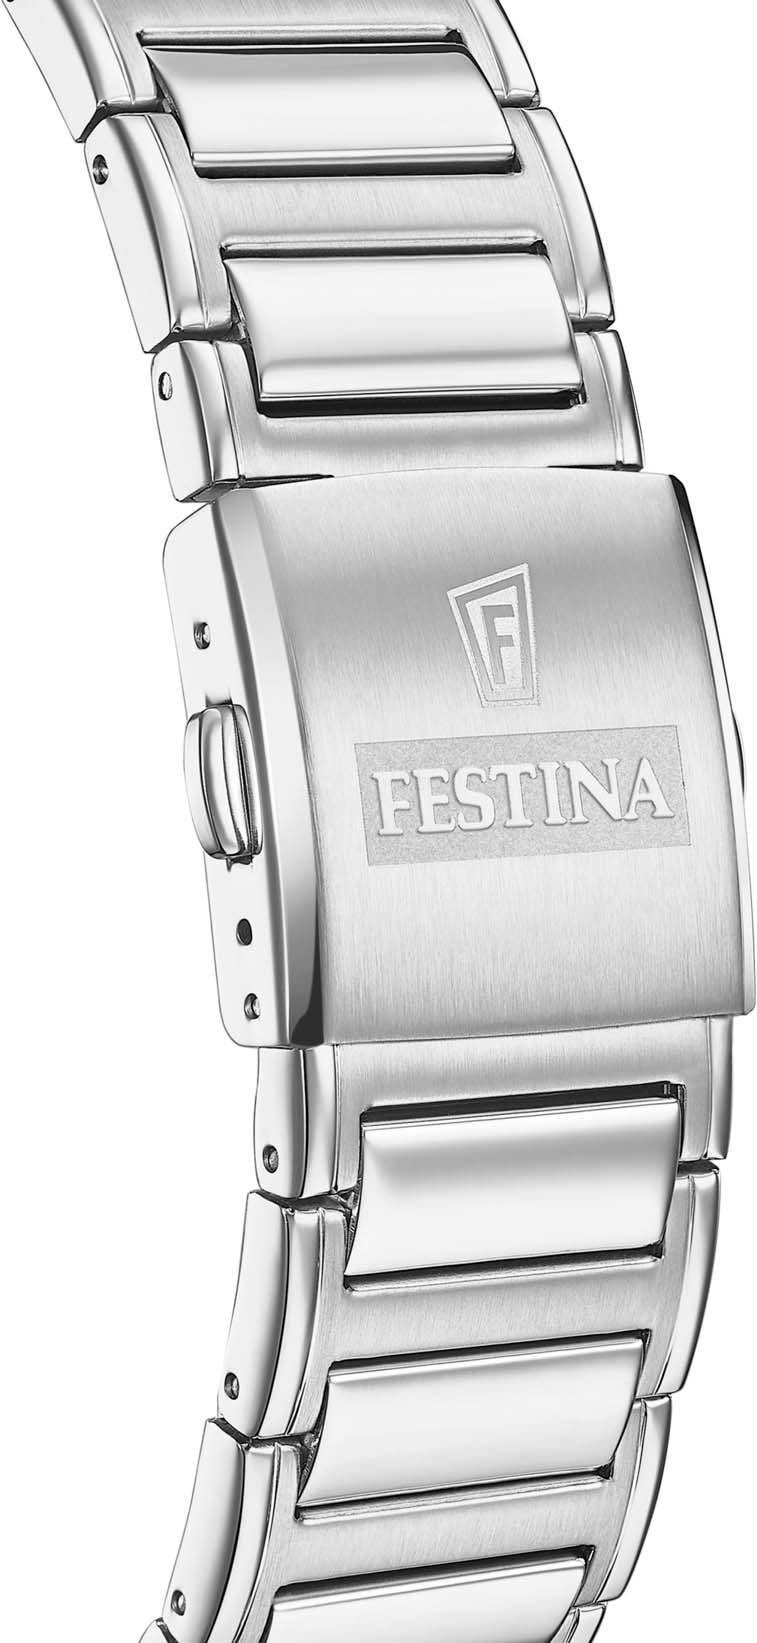 | »F20635/4« Festina walking I\'m bestellen Chronograph